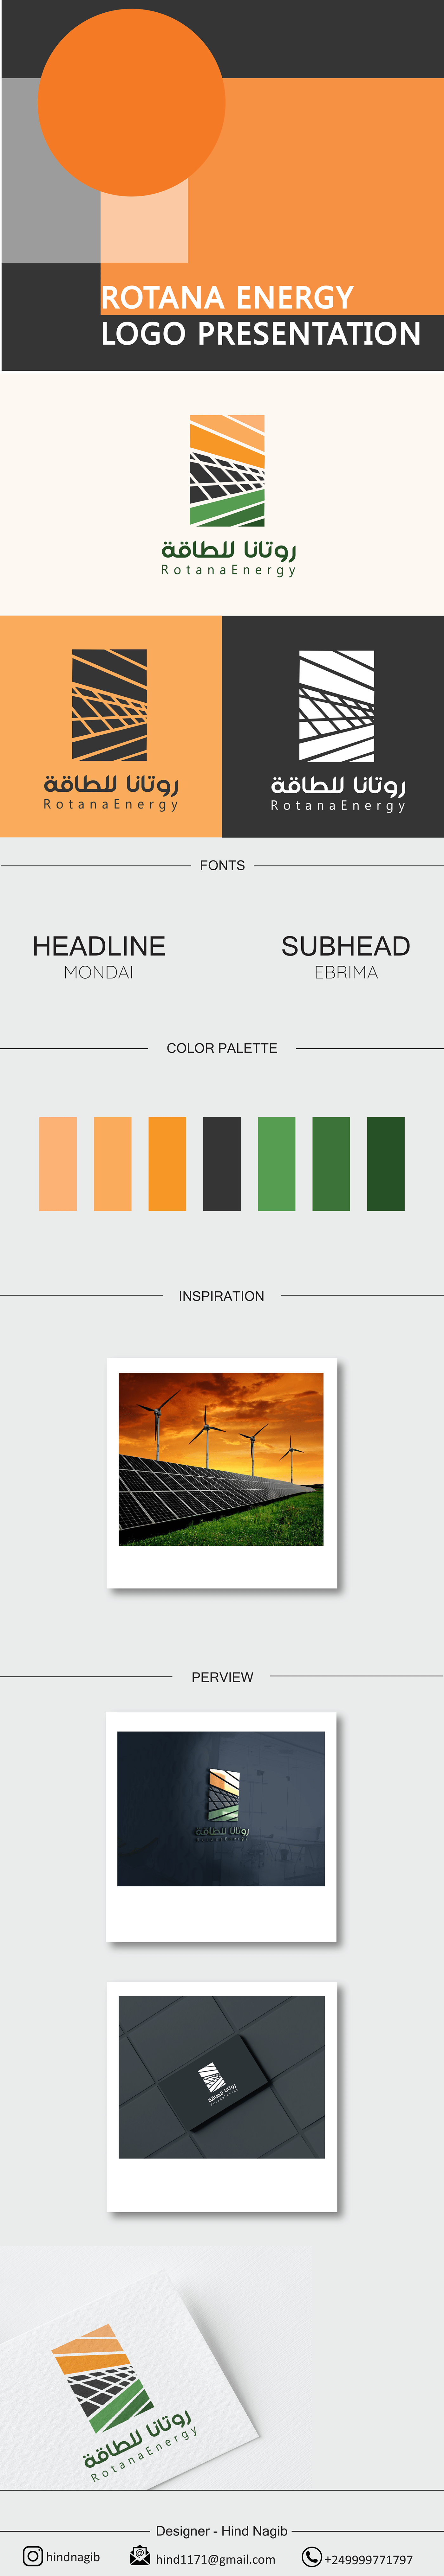 #solar #energy #logo